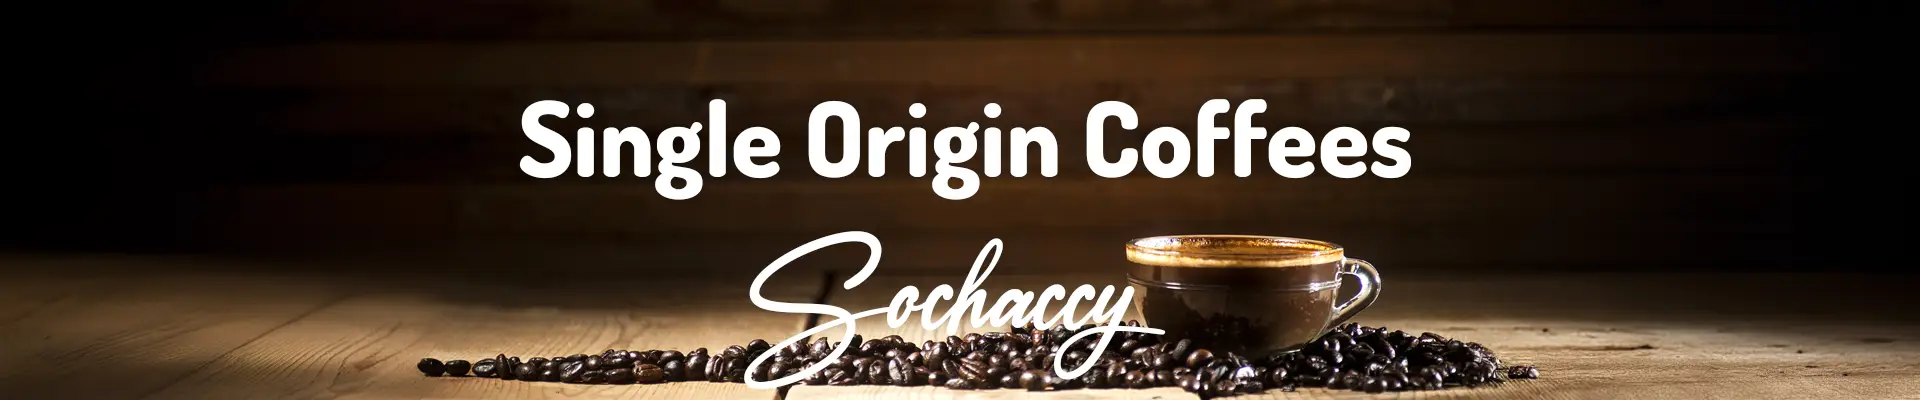 Single origin coffees